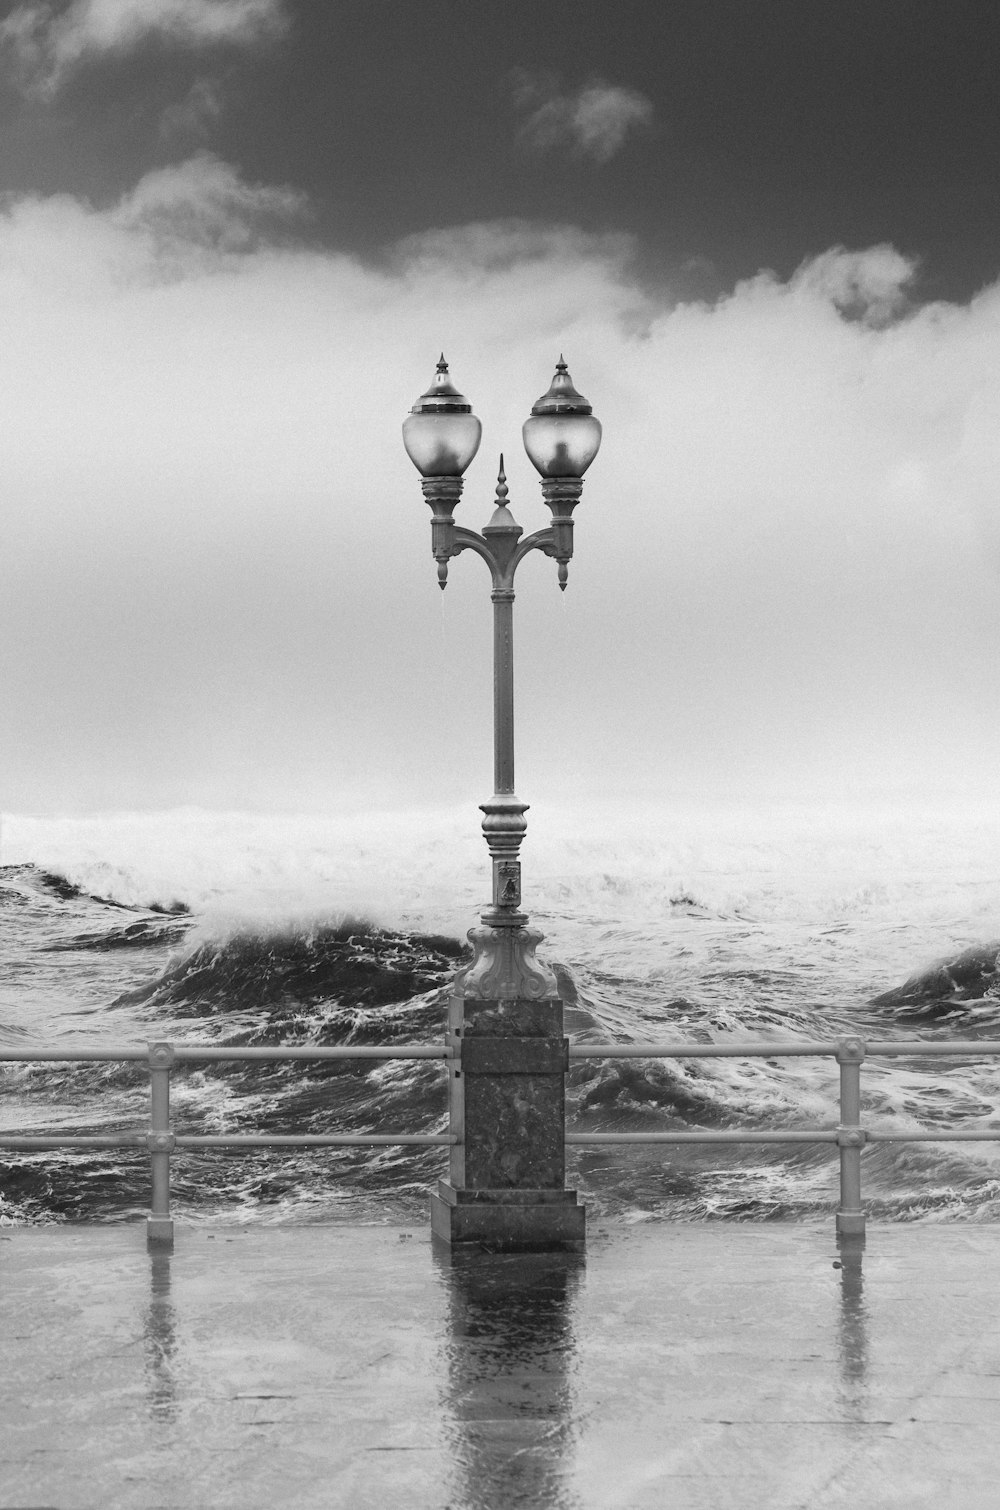 Fotografía en escala de grises de una lámpara al aire libre cerca del mar